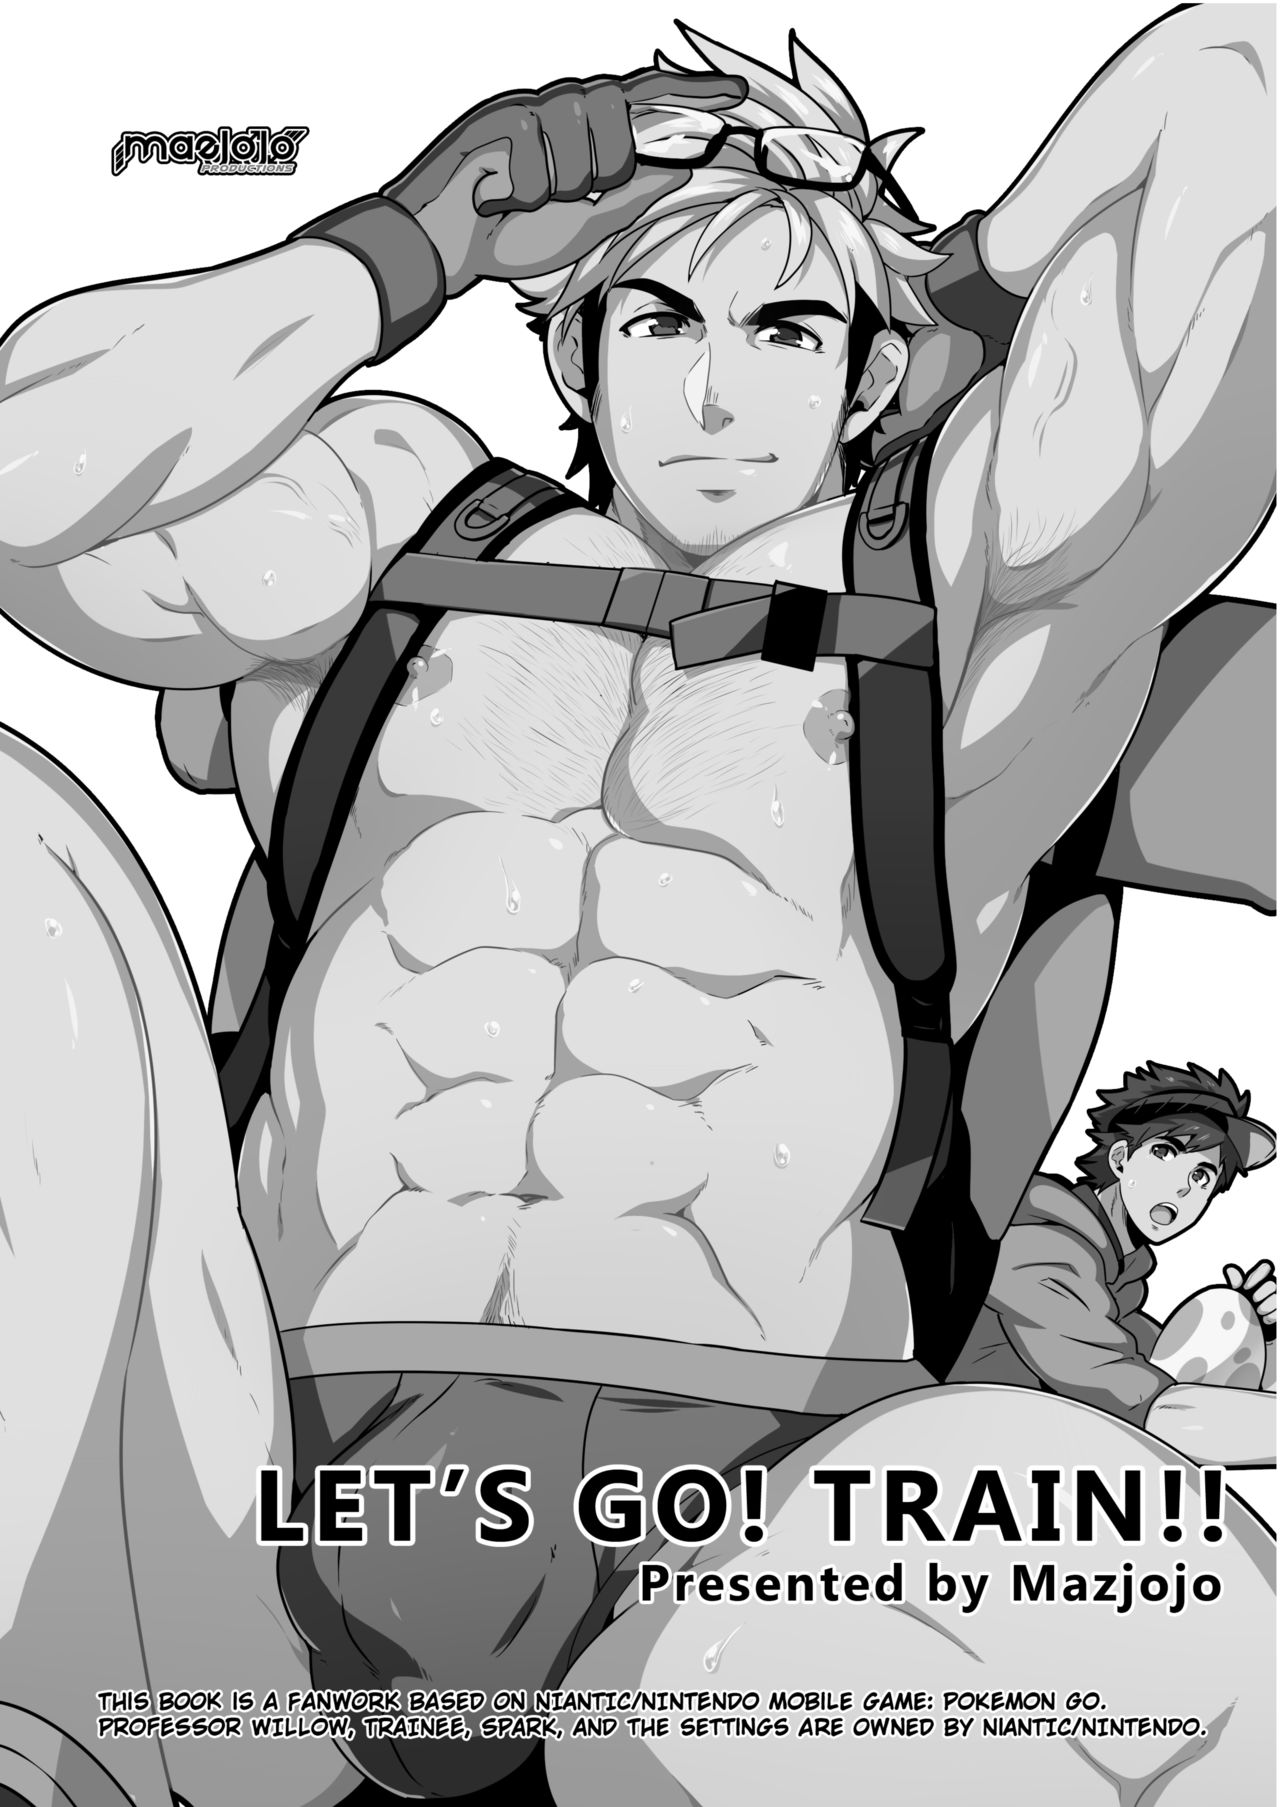 Let's GO! TRAIN!!